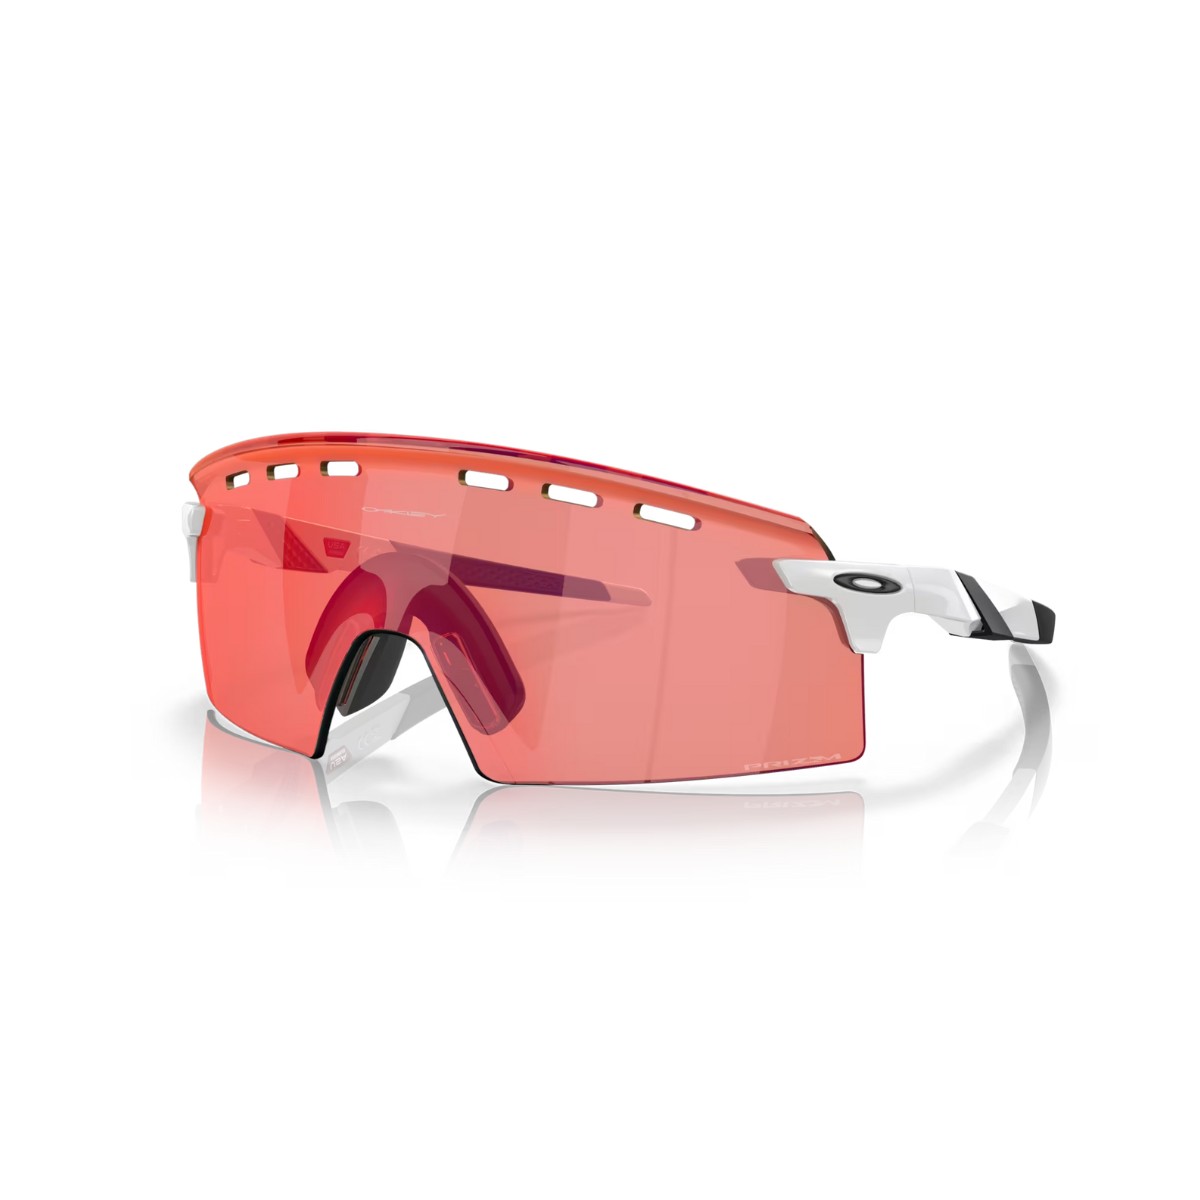 Buy Now Oakley Encoder Strike Vented Glasses Orange| Free shipping